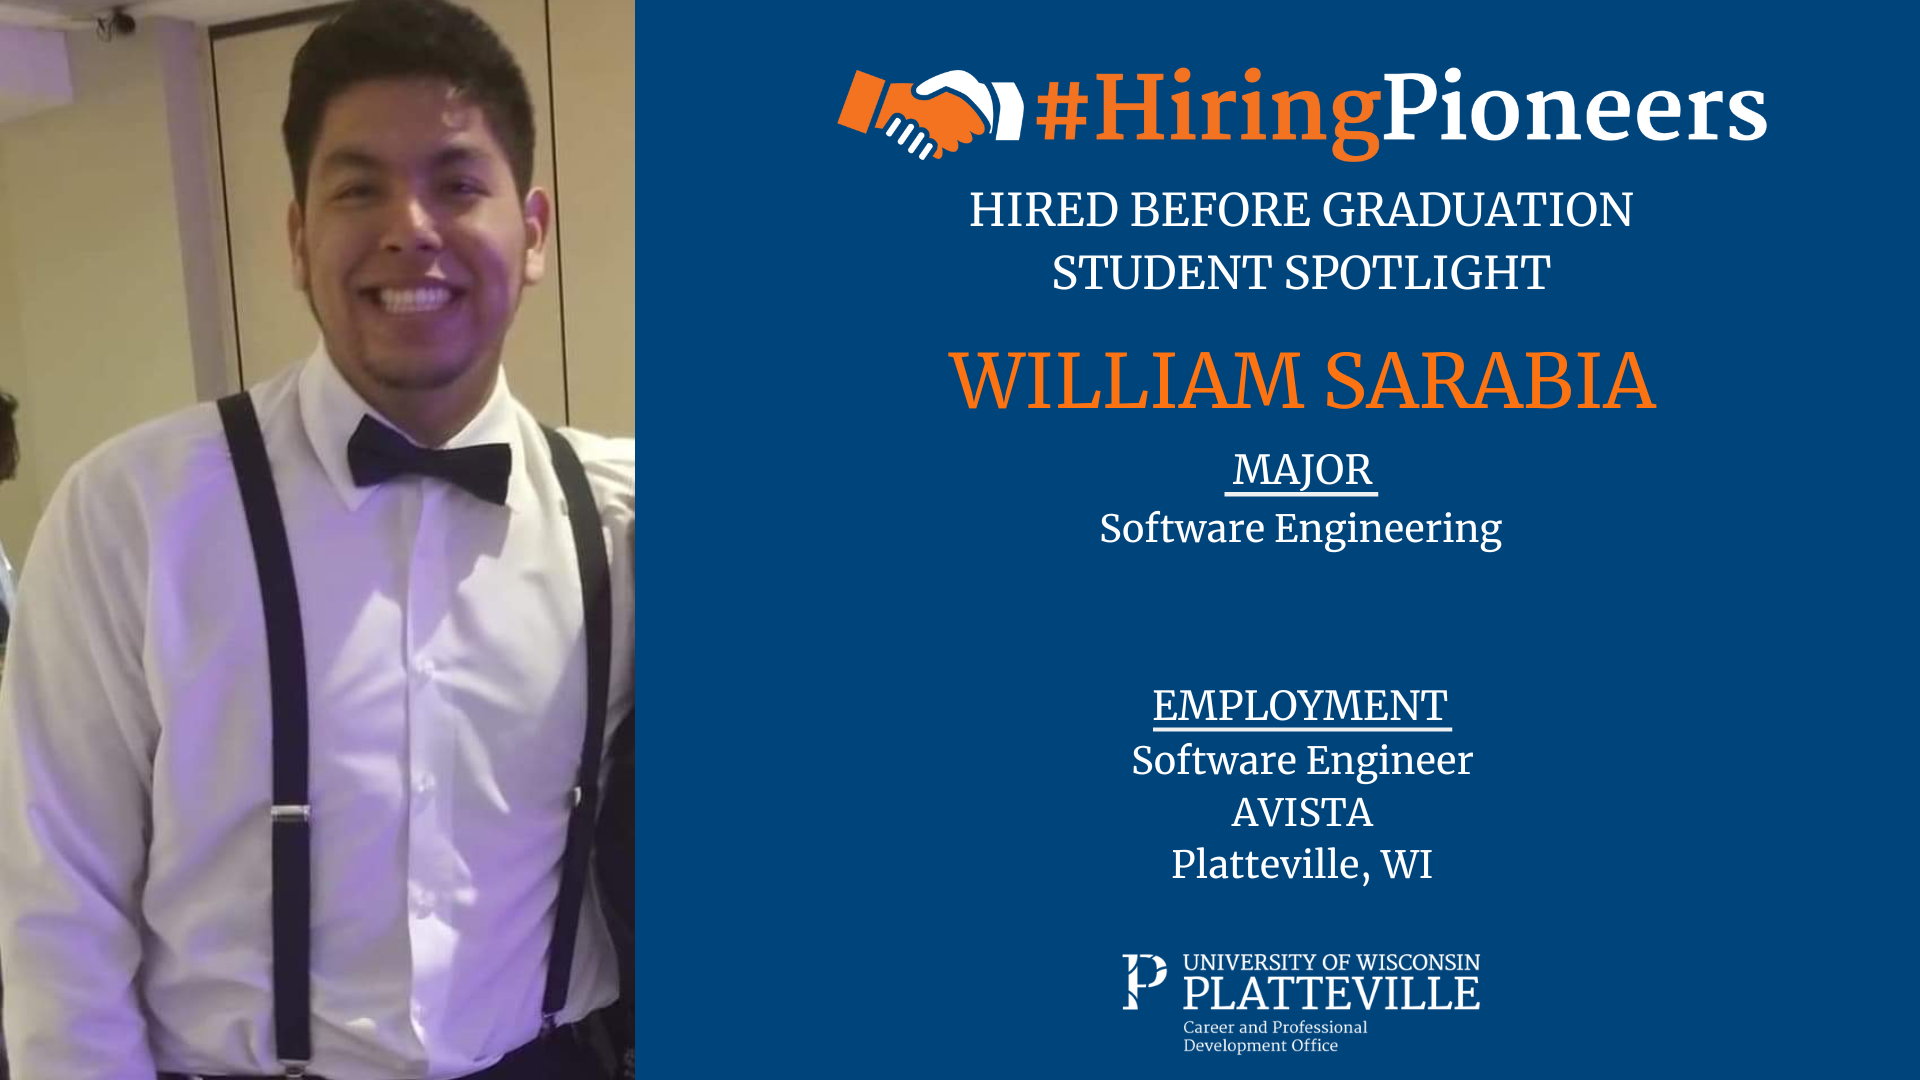 William Sarabia, Hired Before Graduation